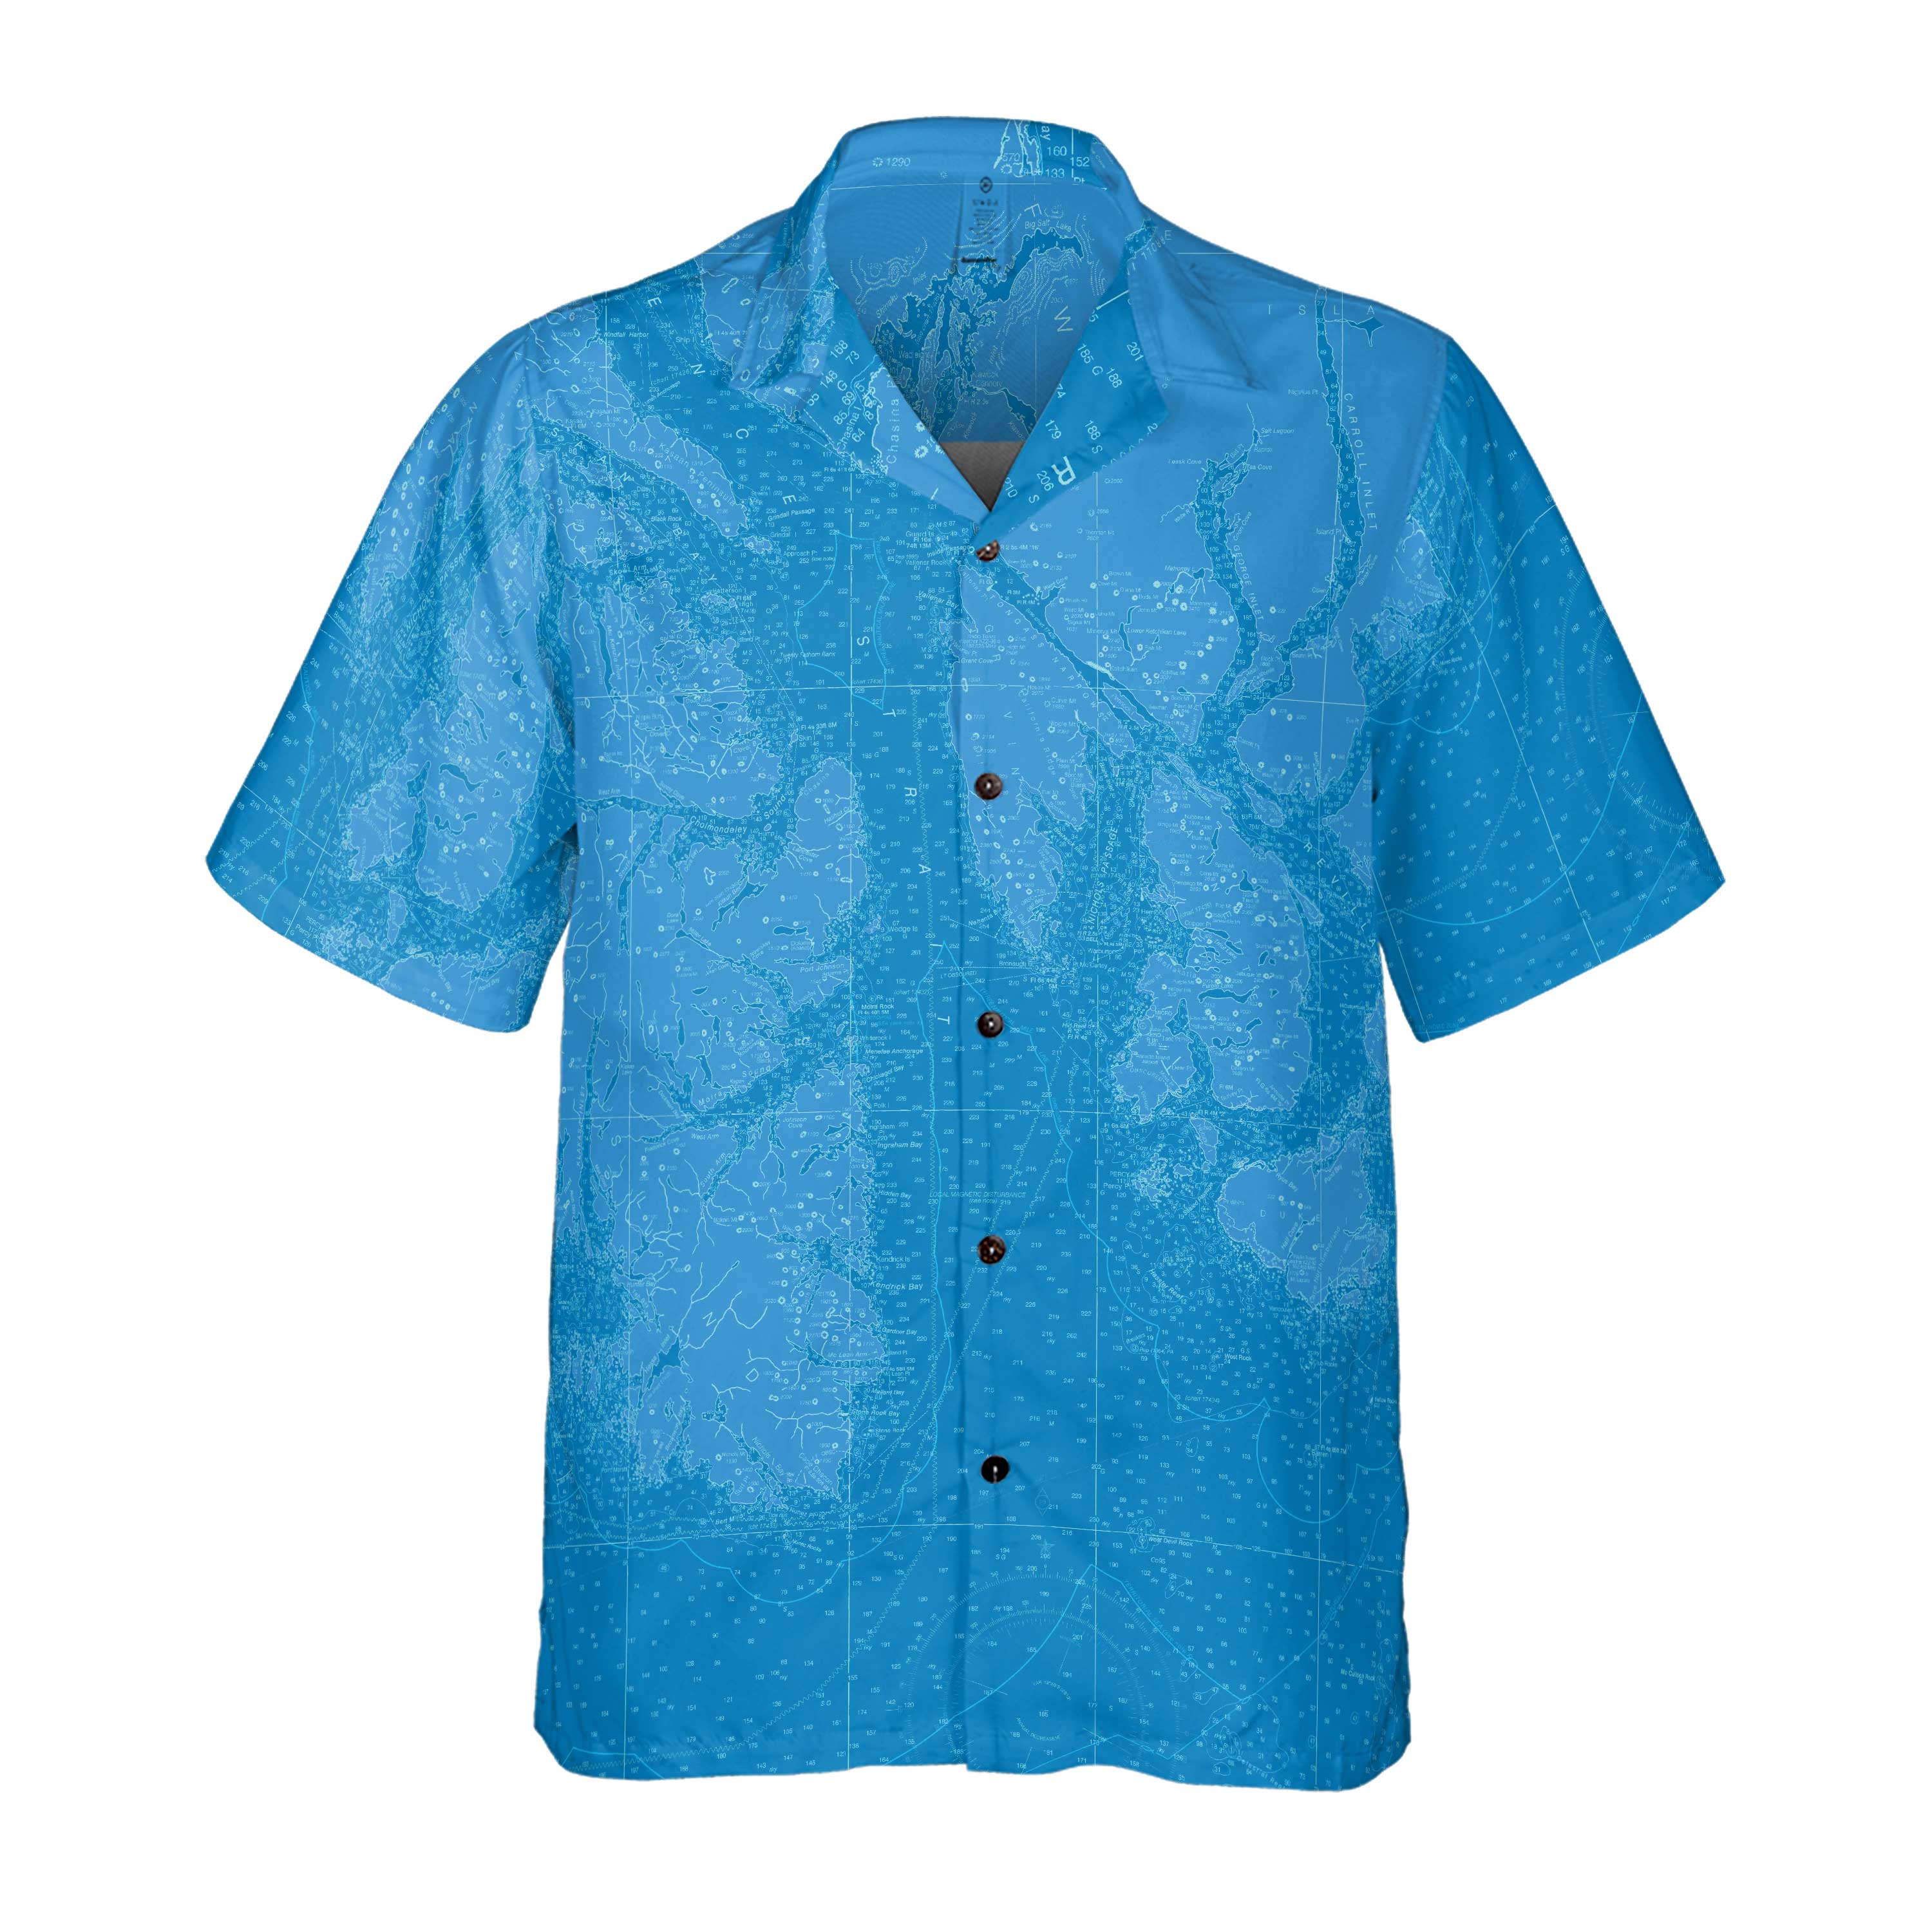 The Ketchikan Blues Coconut Button Camp Shirt